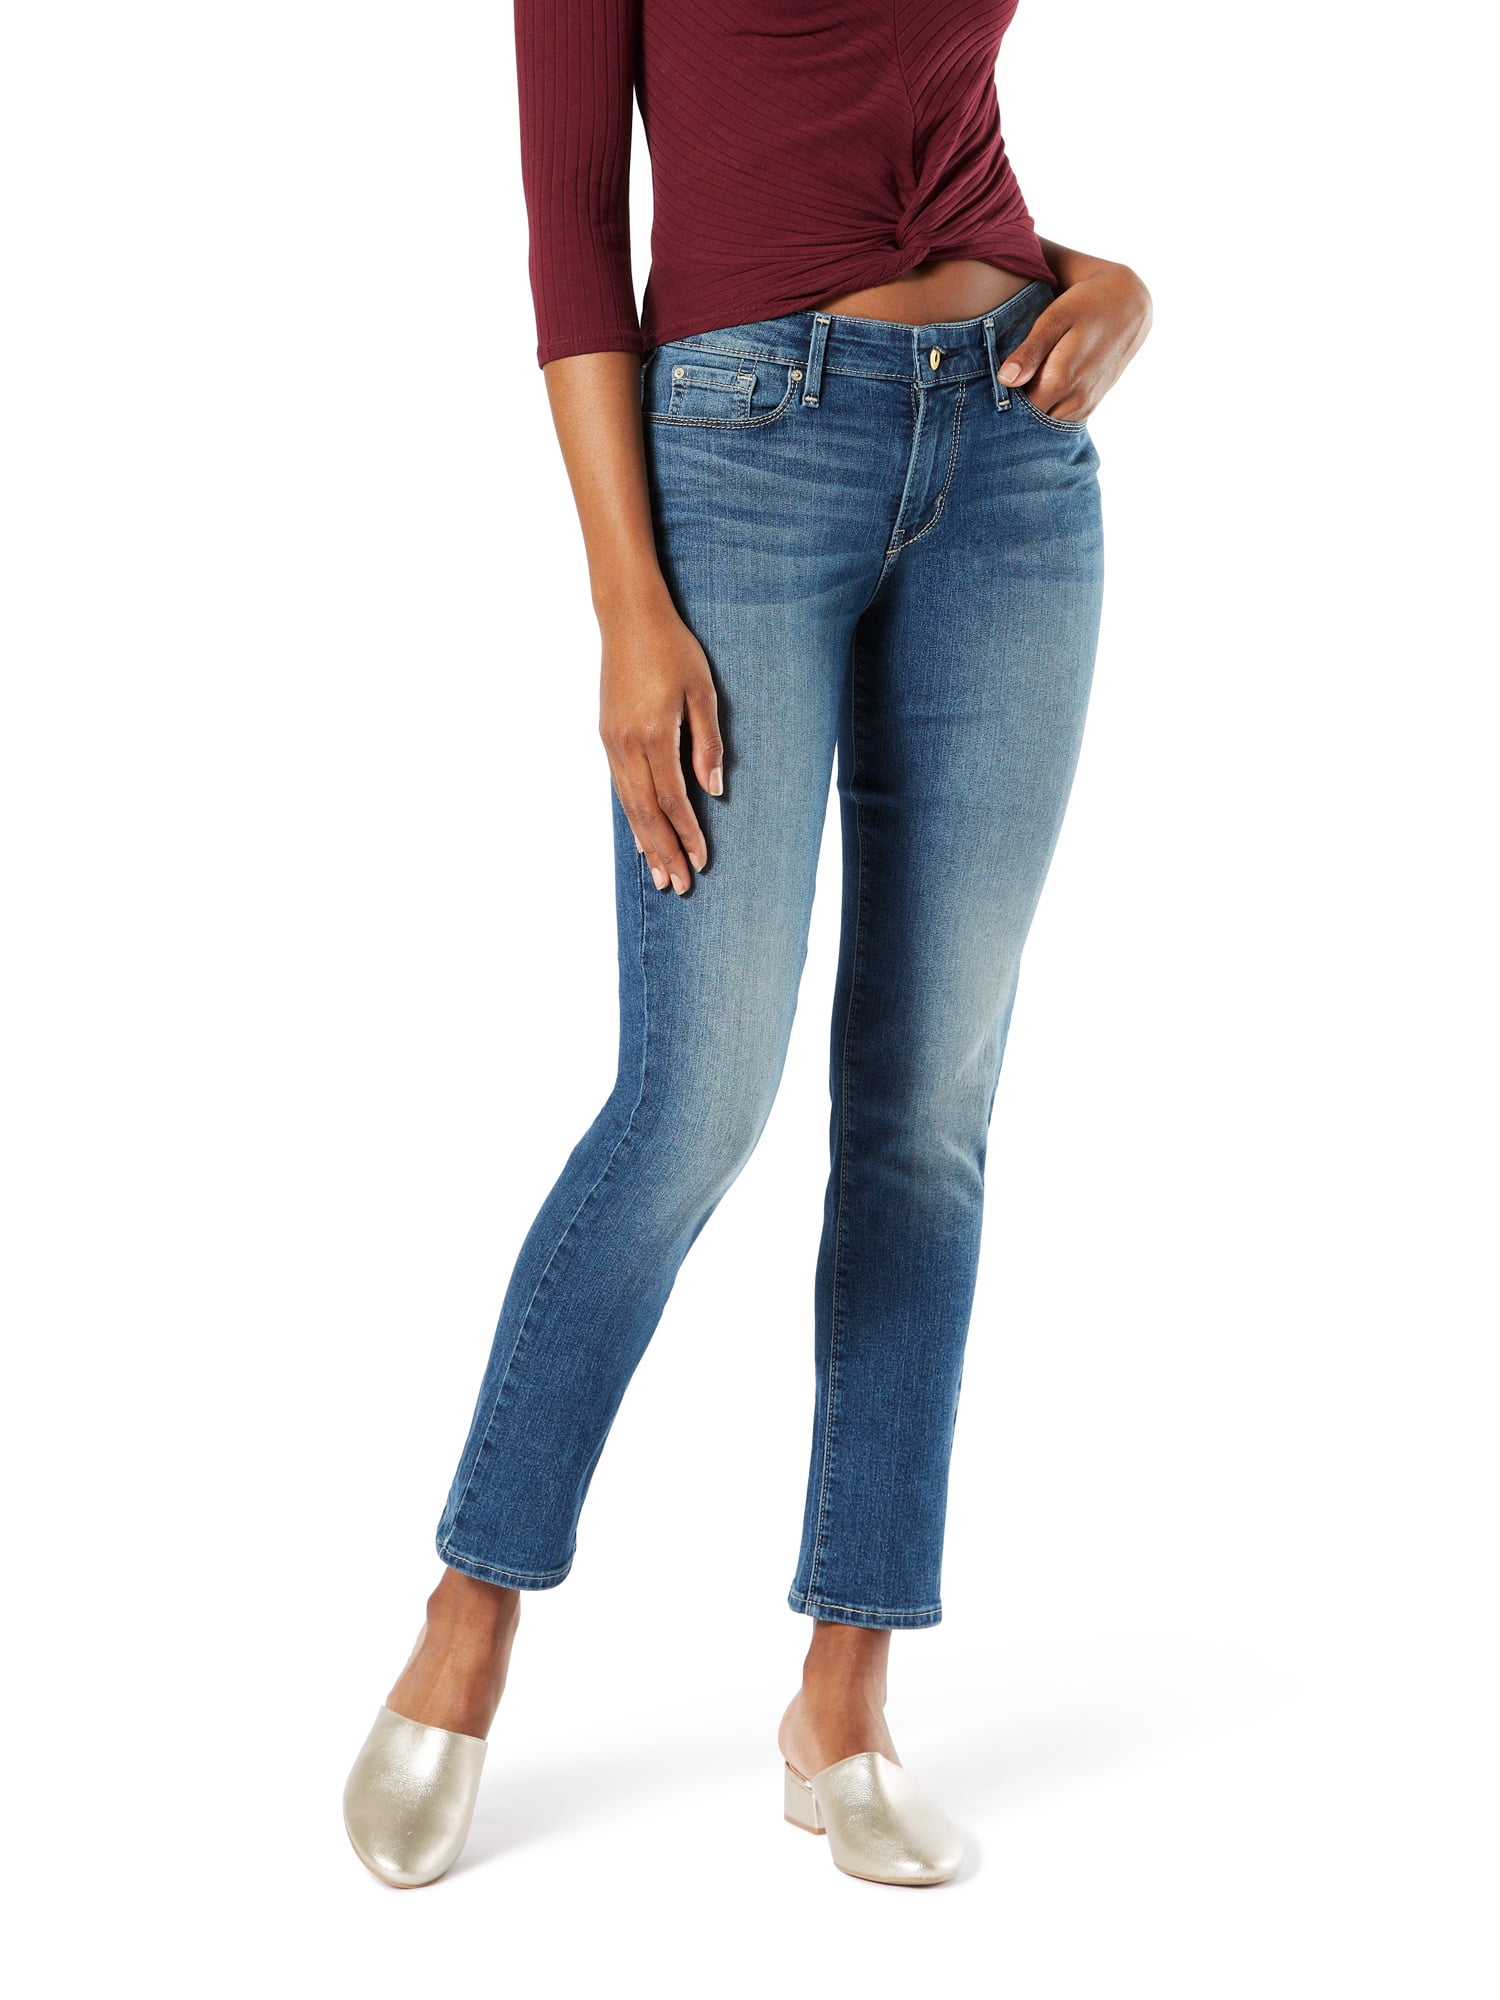 Levi's Women's Jeans "724" High-Rise Straight,Slim Through hip & thigh,Blue 0014